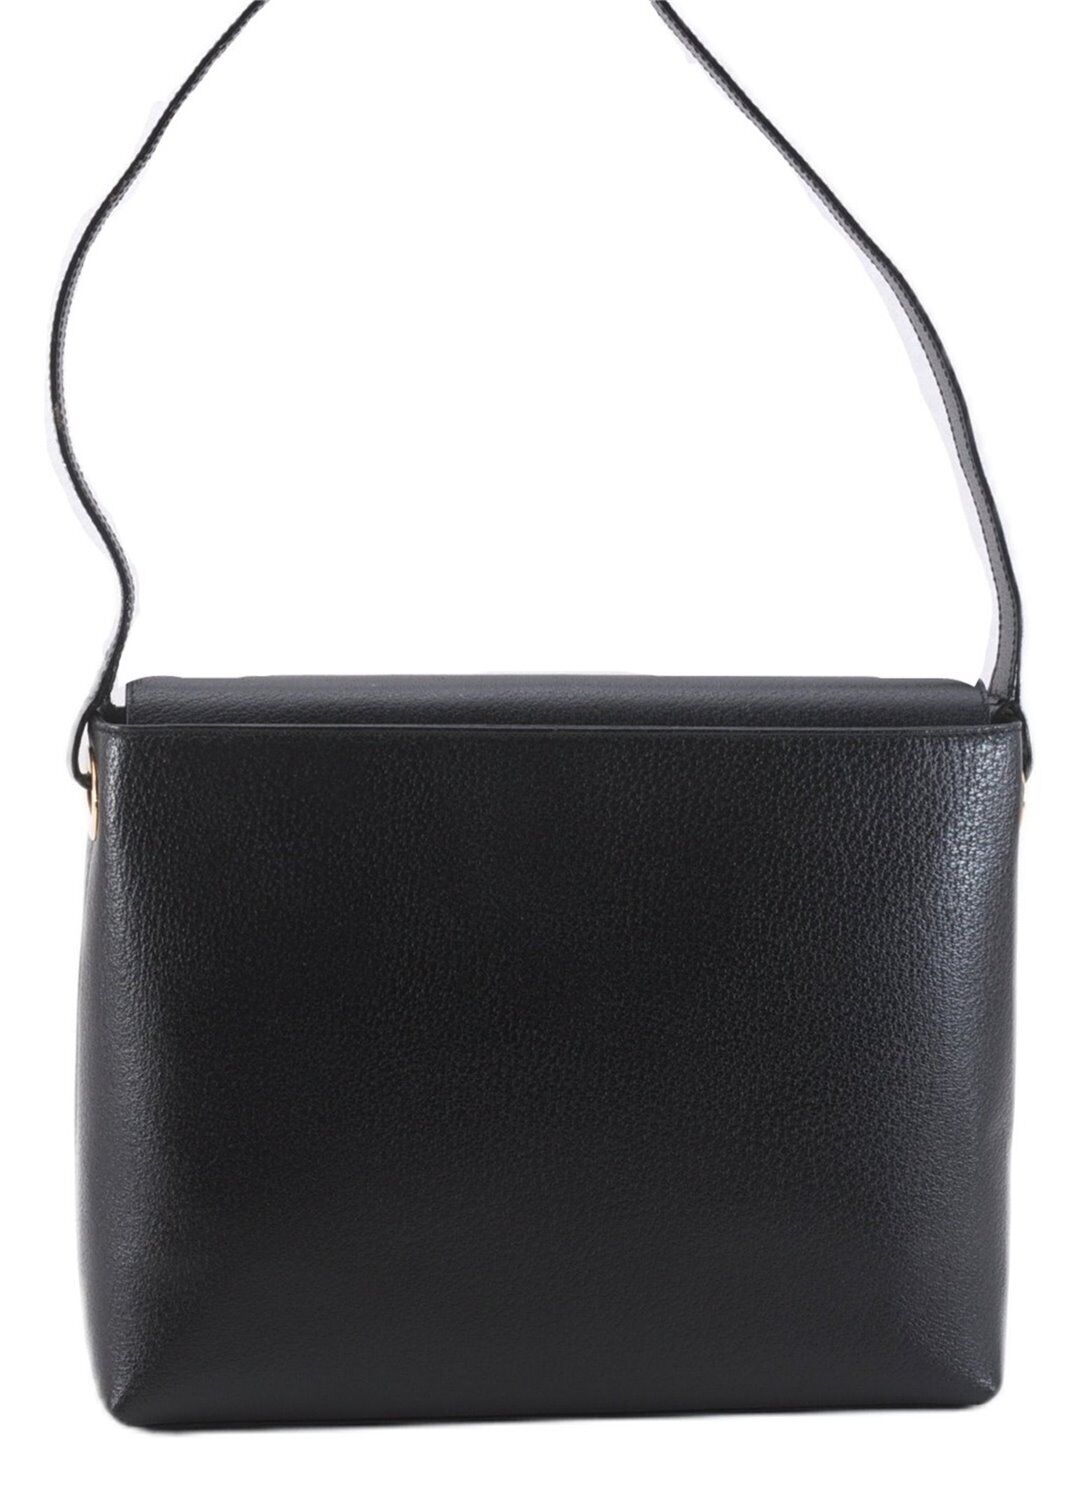 Authentic GUCCI Vintage Shoulder Hand Bag Purse Leather Black 0876F